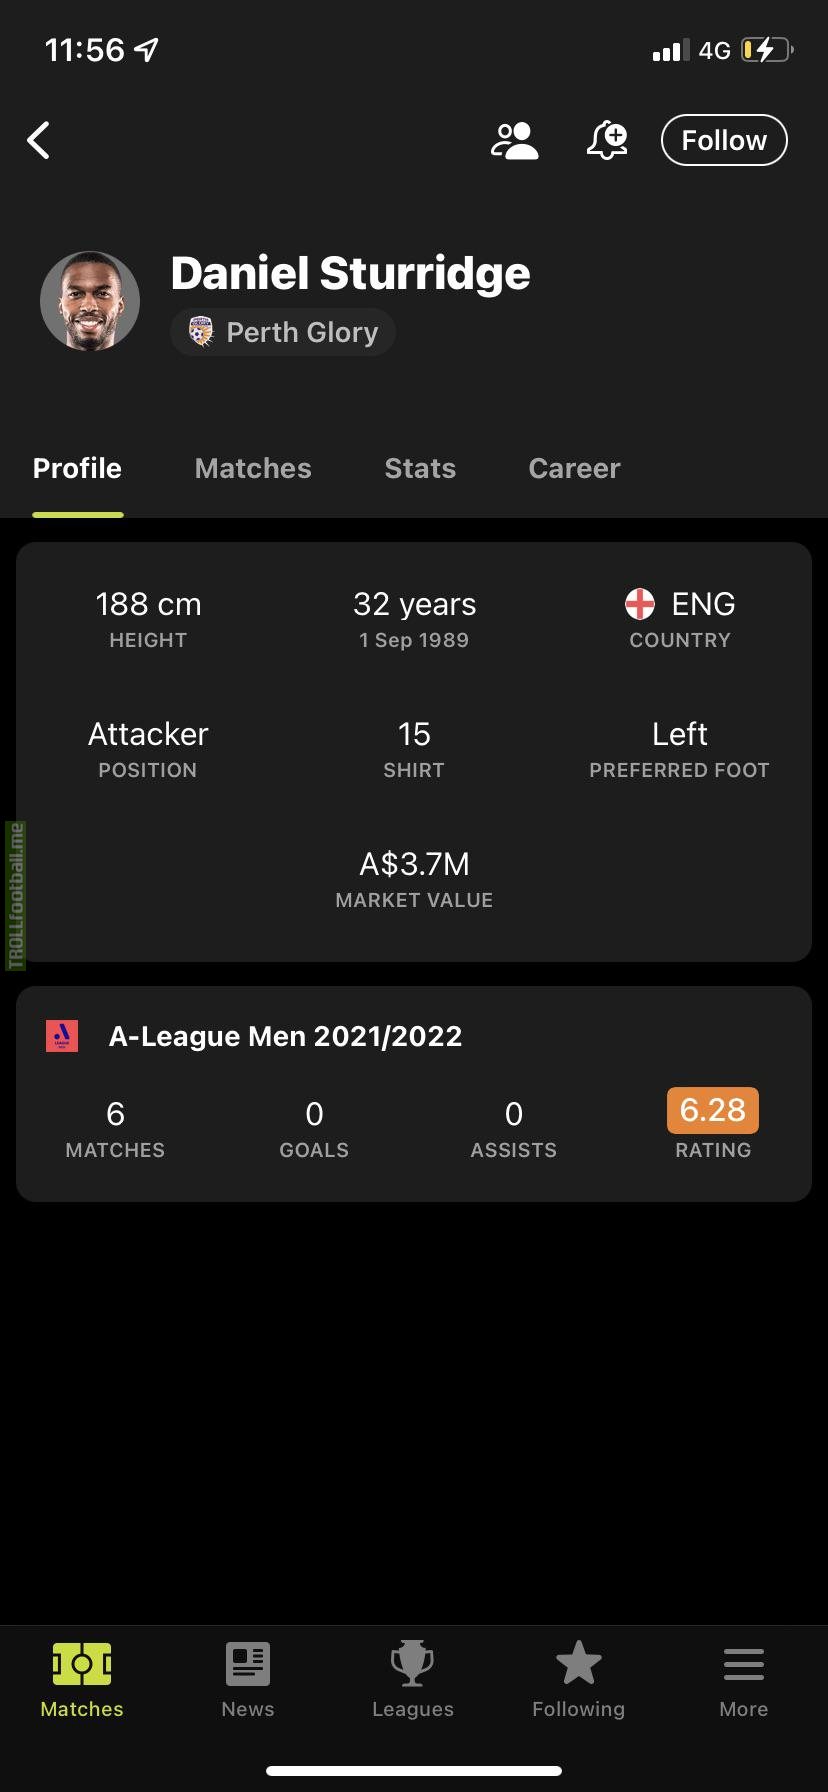 Heres Daniel Sturridge’s season stats as his teams season came to a close tonight in the Australian A-League… 6 apps 145 mins 0 goals